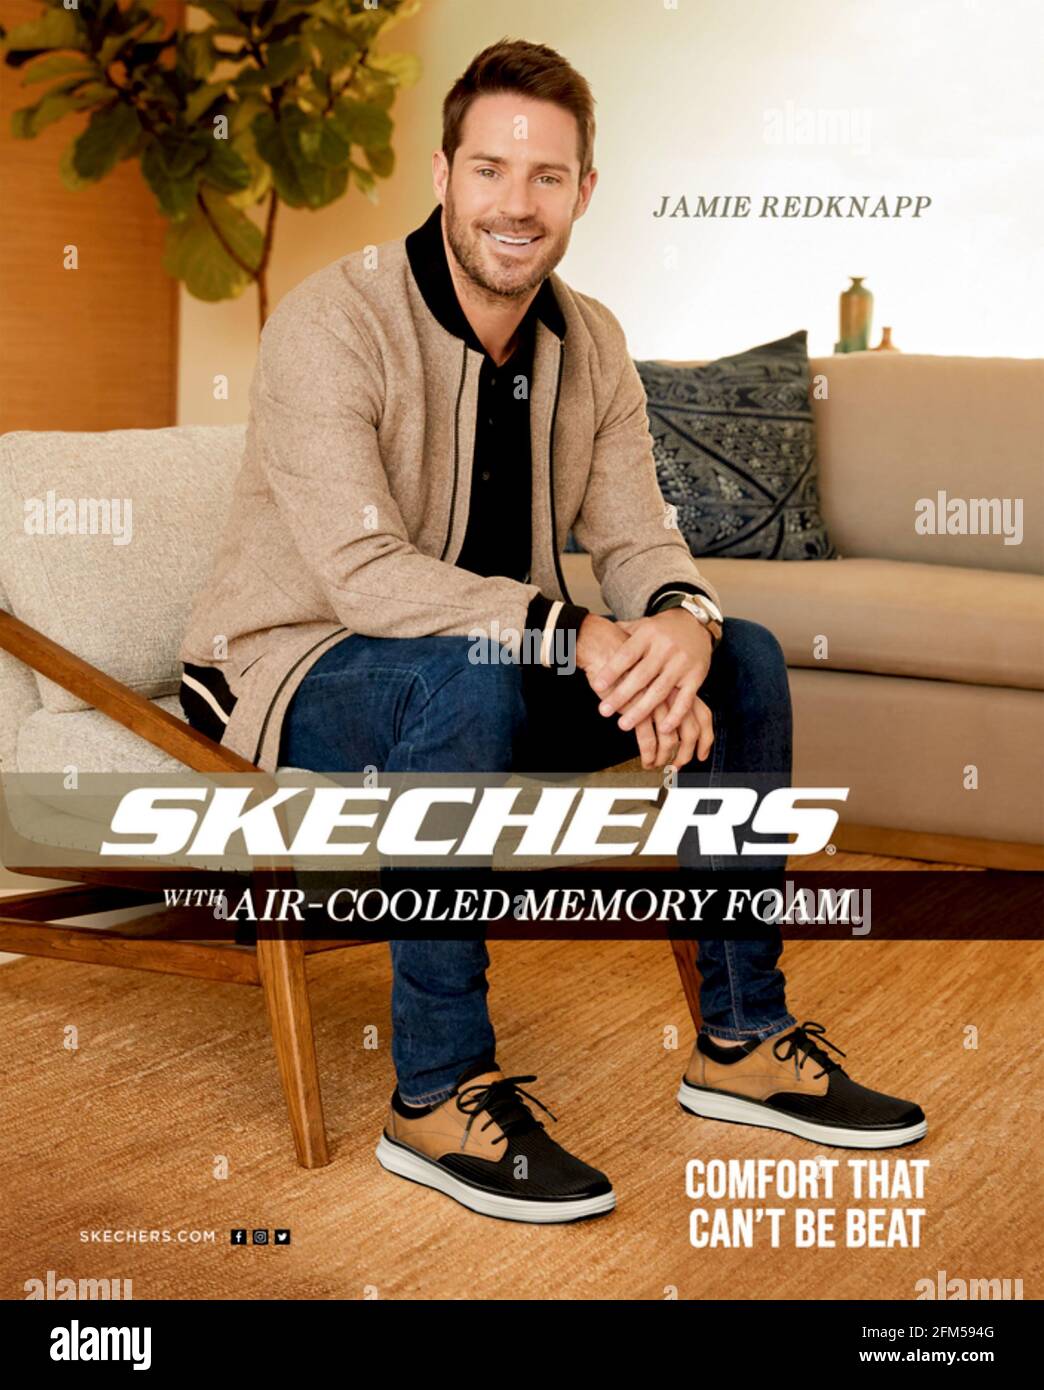 2020s UK Skechers Magazine Advert Photo - Alamy